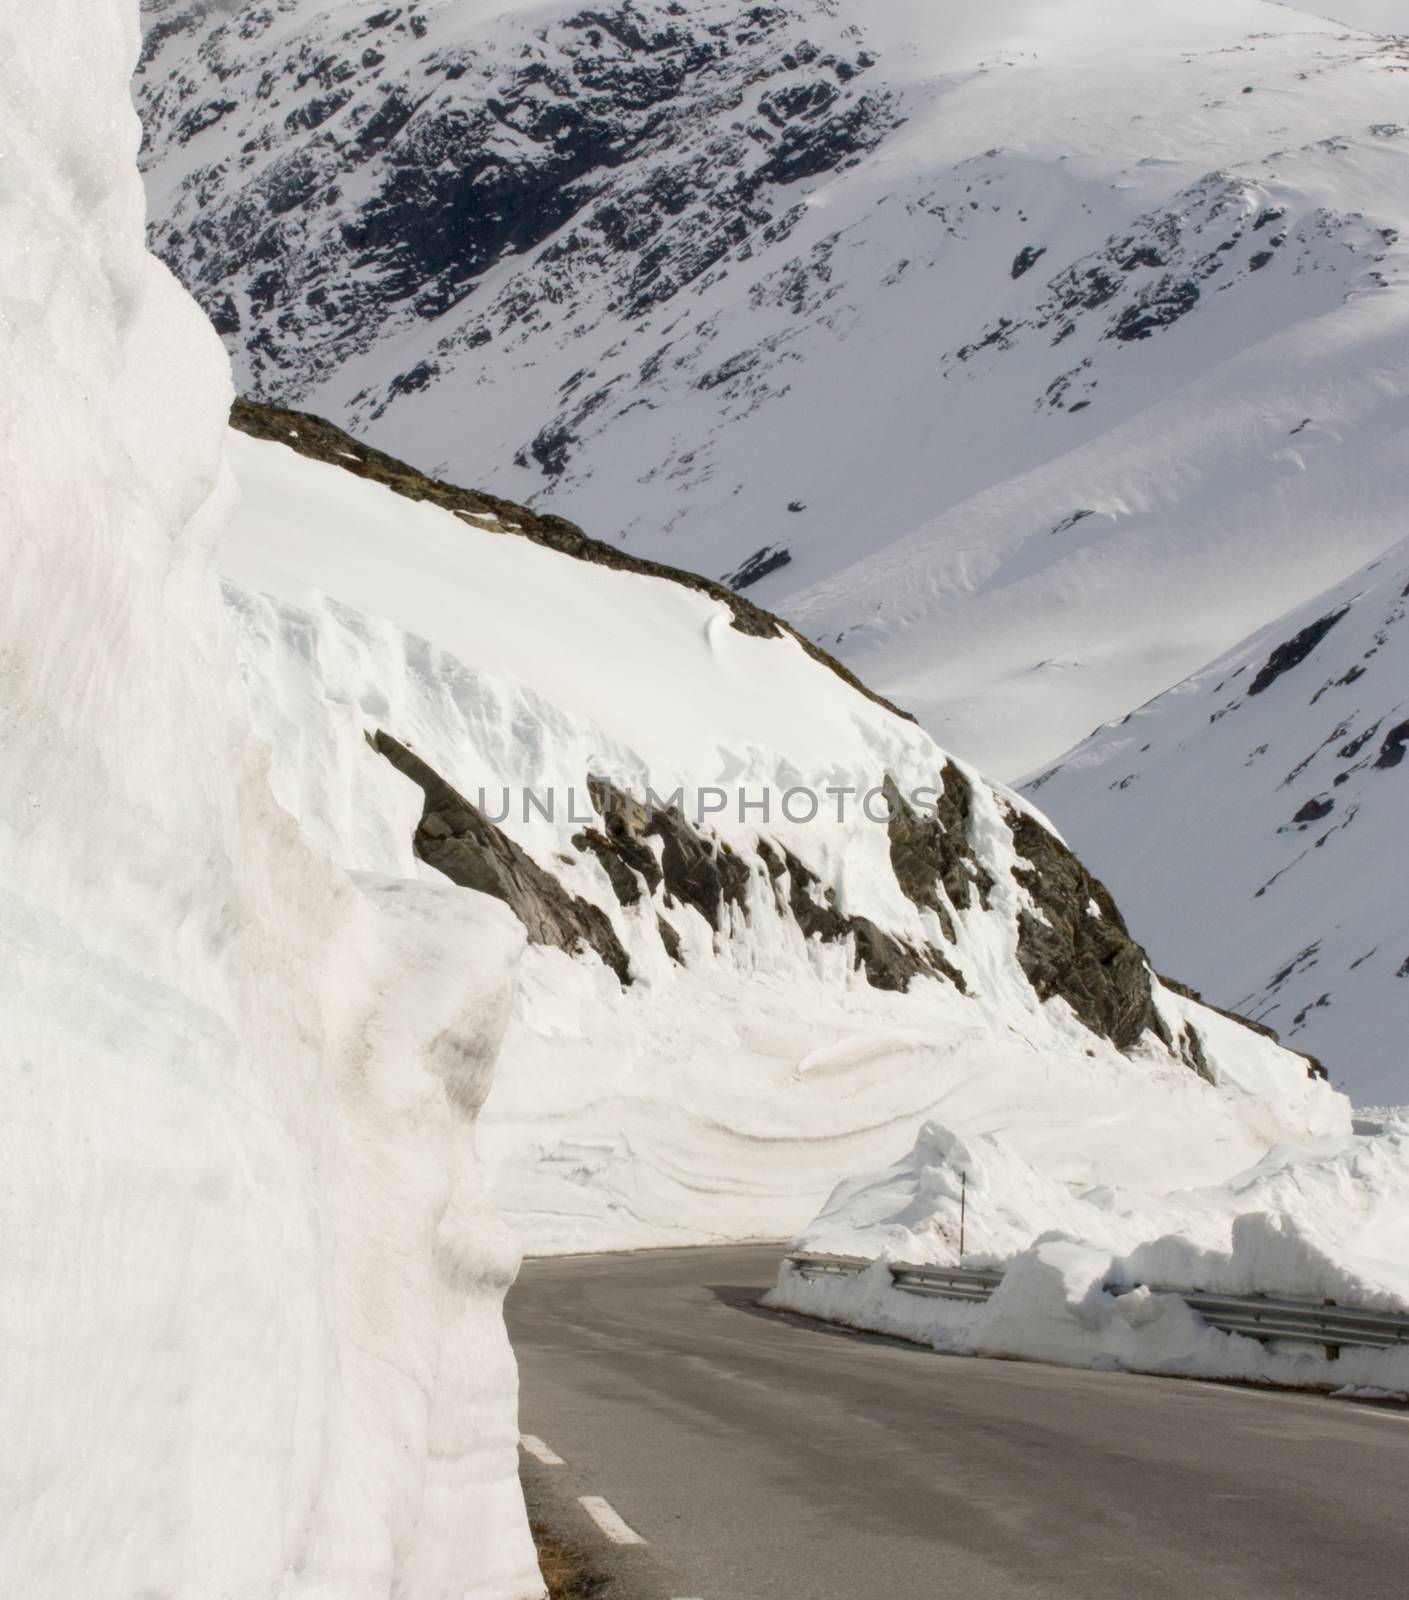 Snowy mountain road leading to Geiranger, Norway